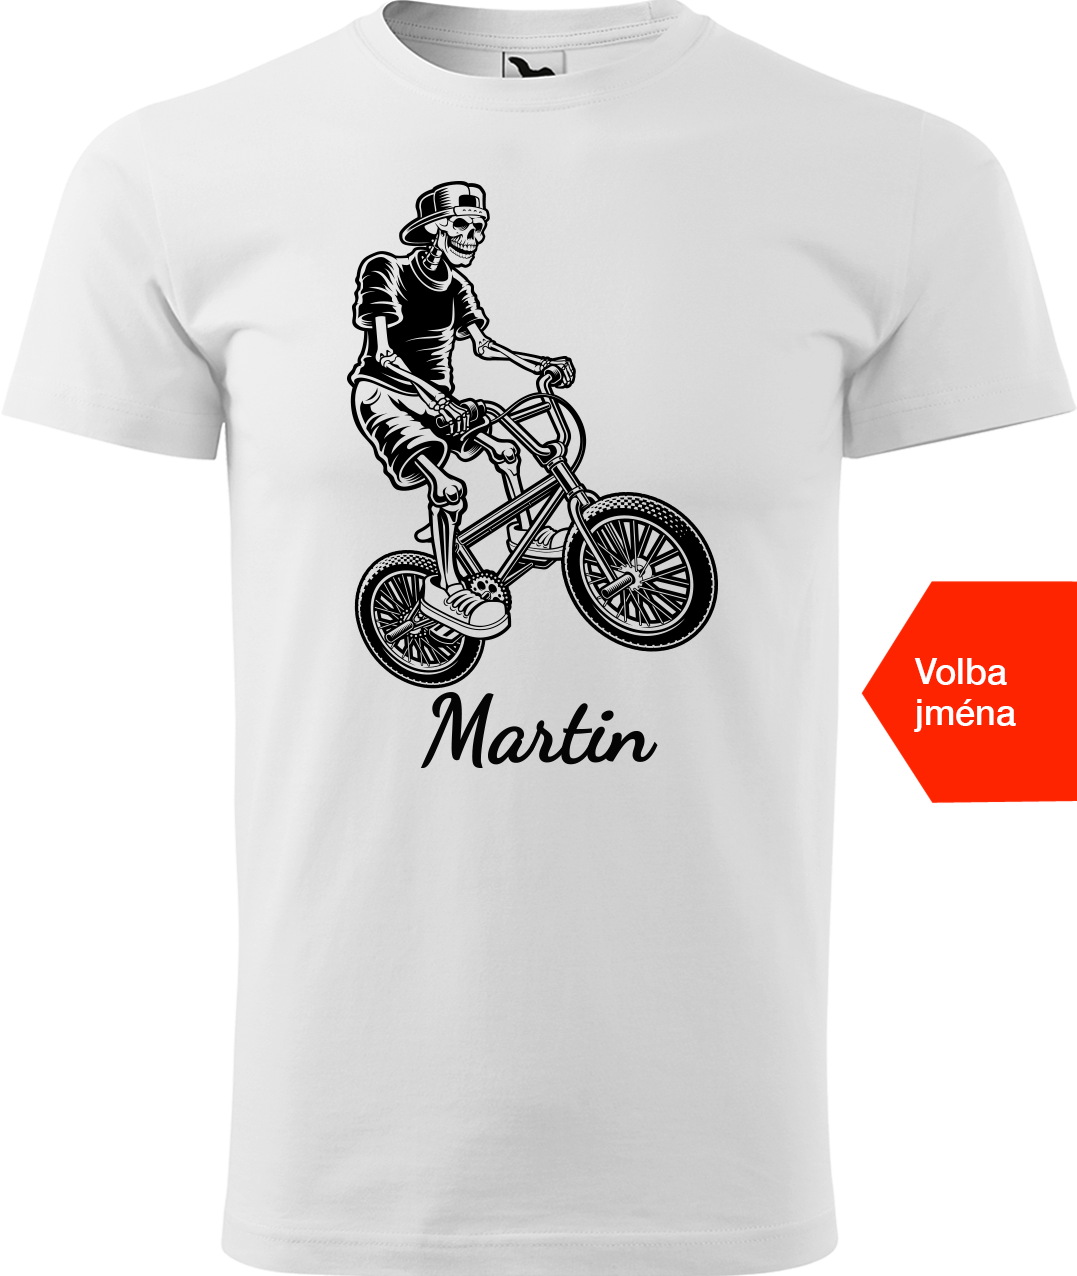 Pánské tričko s kolem a jménem - Trial Bike Velikost: M, Barva: Bílá (00)